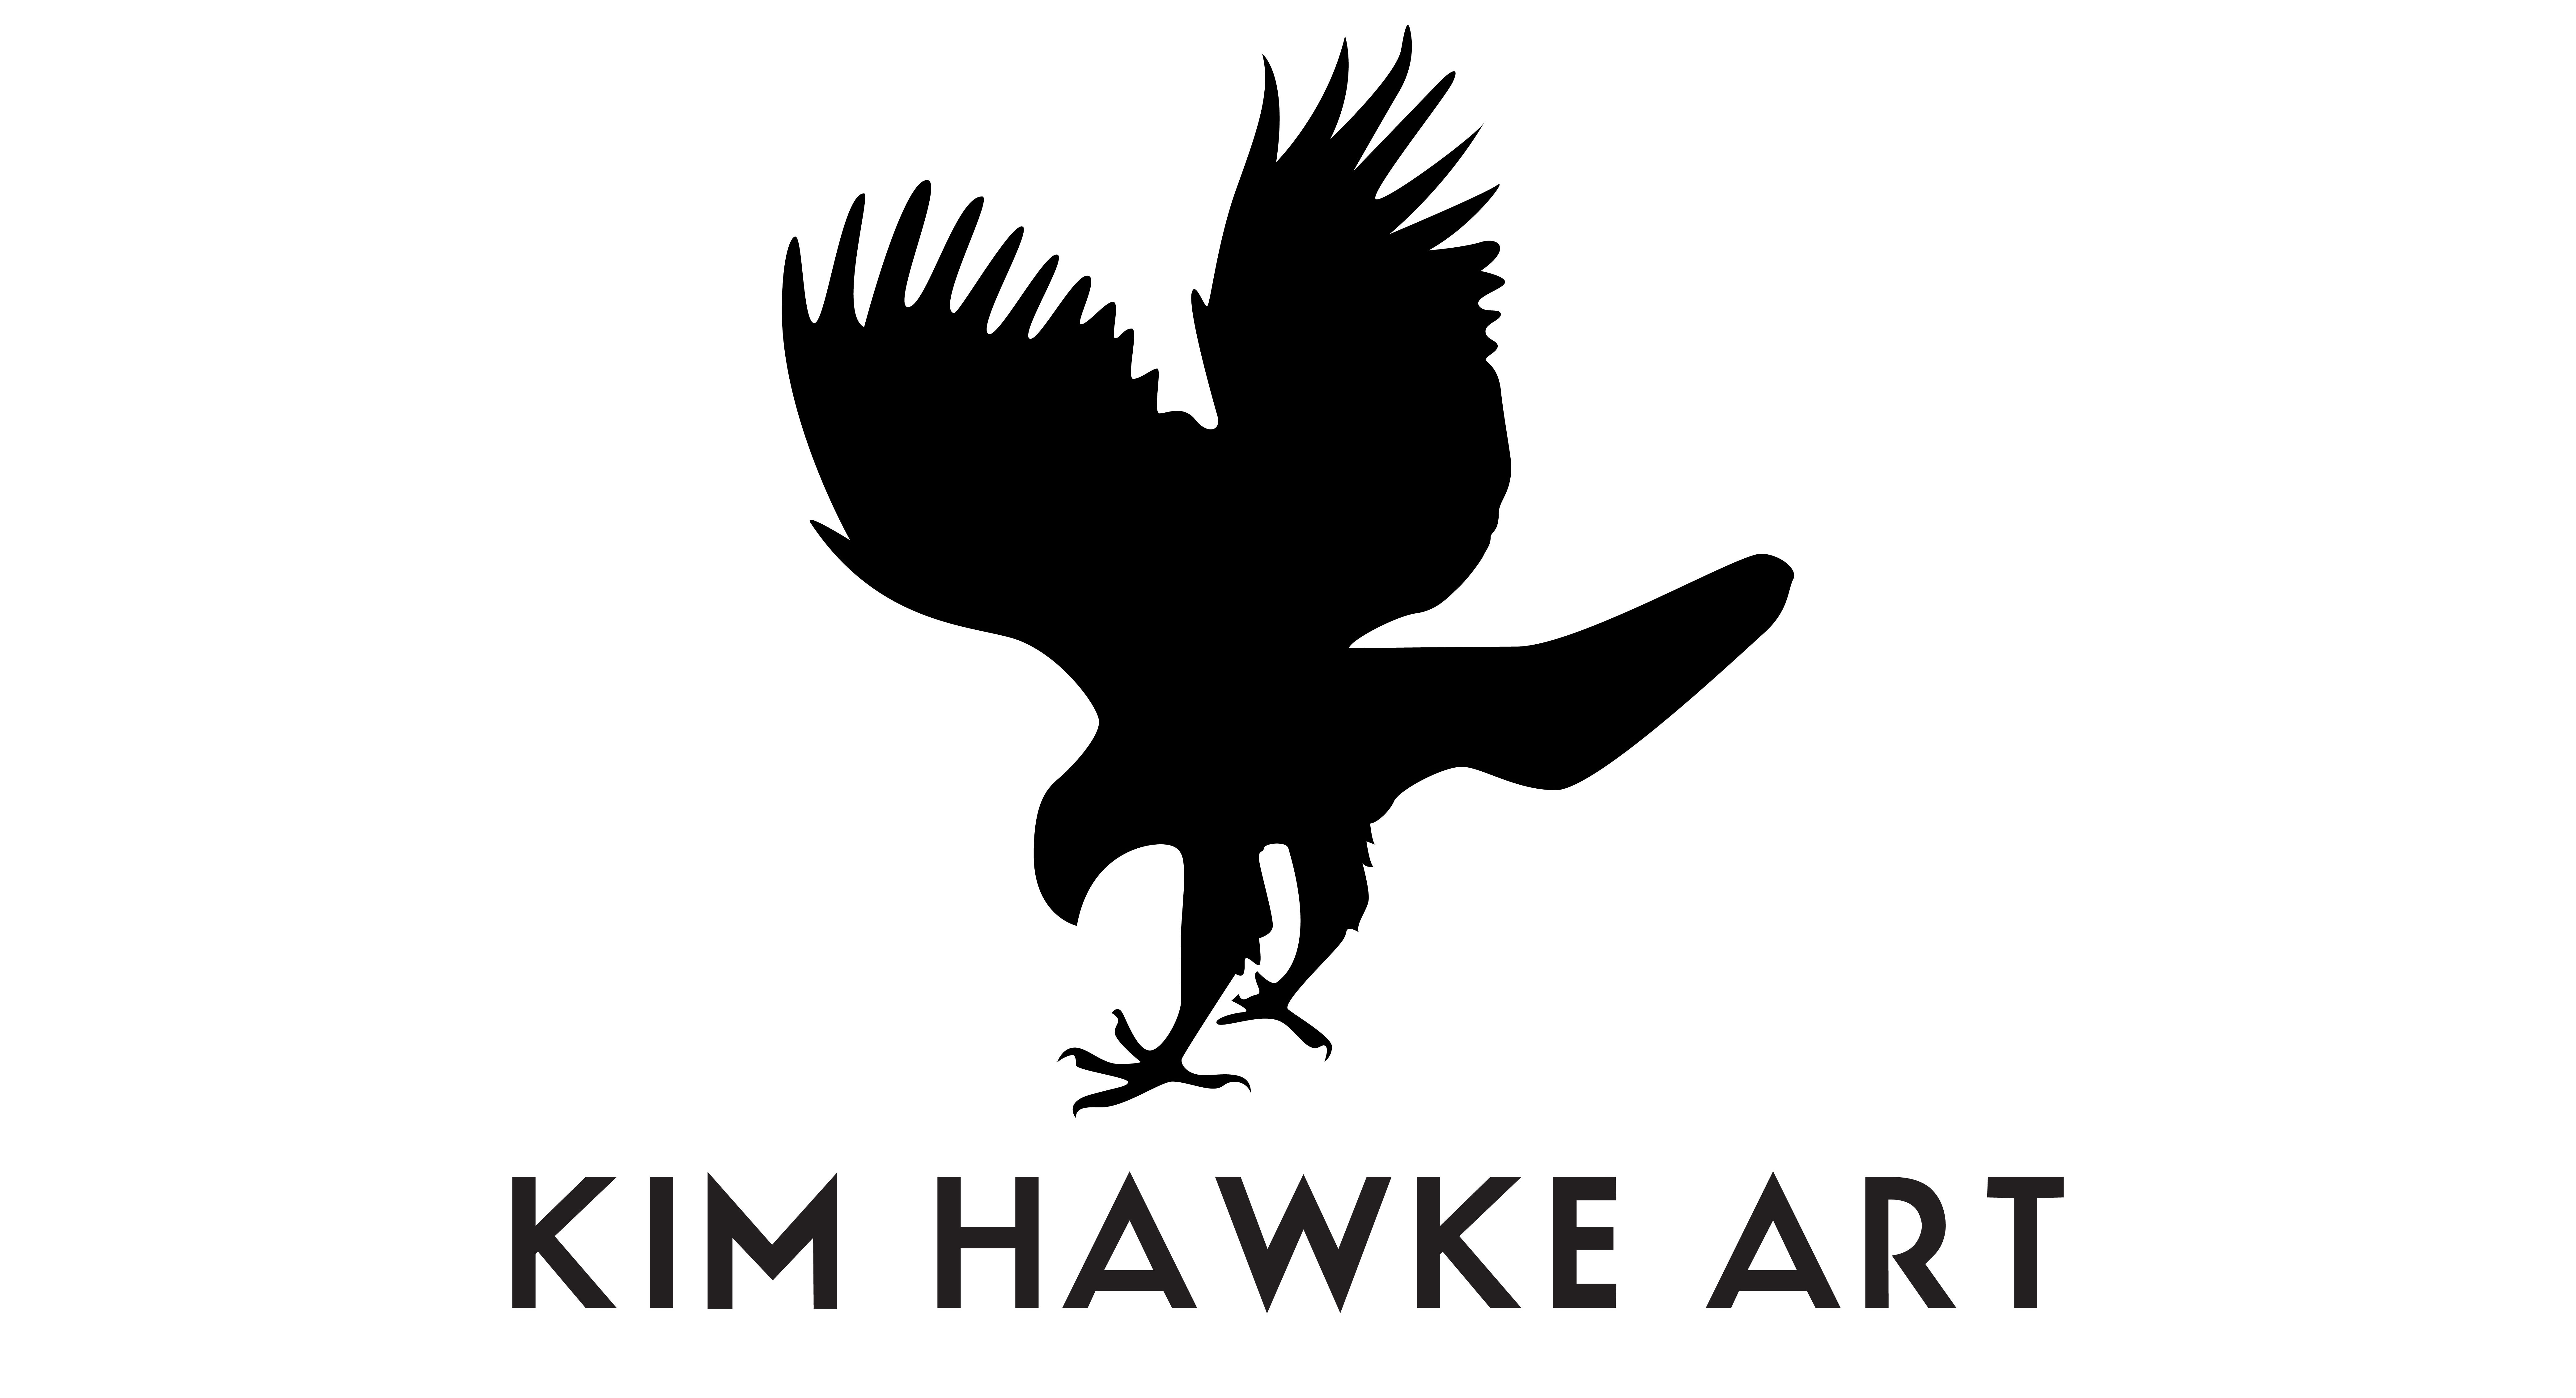 kim.hawke.art